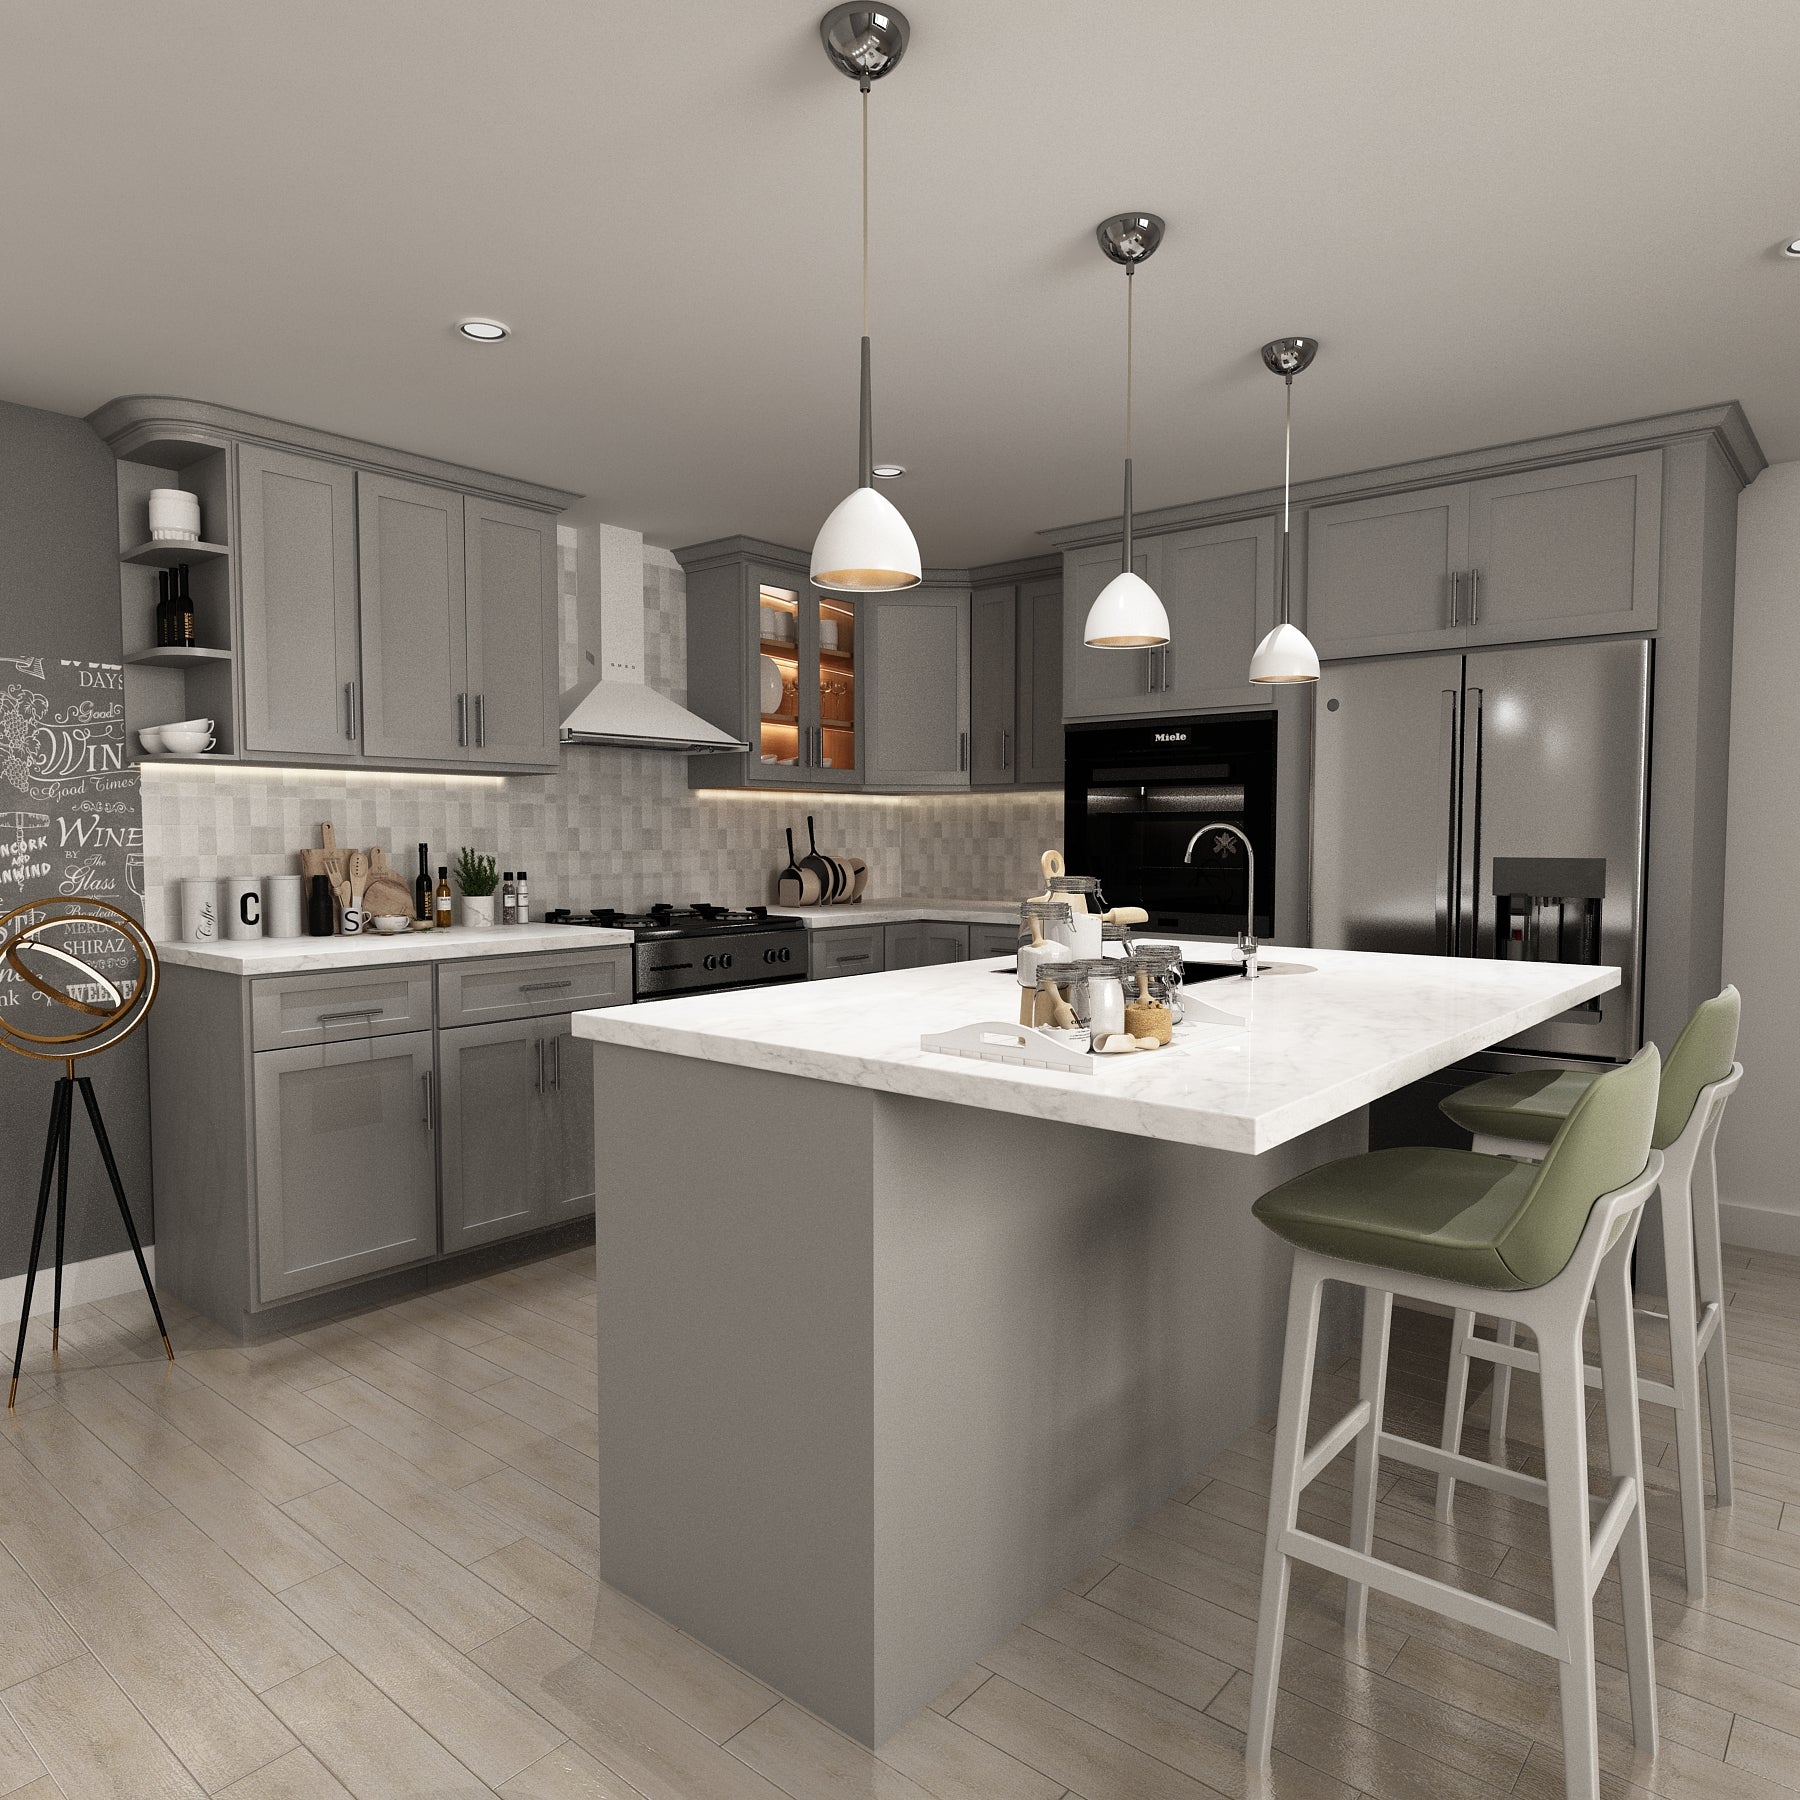 10x10 Kitchen Layout Design - Aria Grey Shaker Cabinets